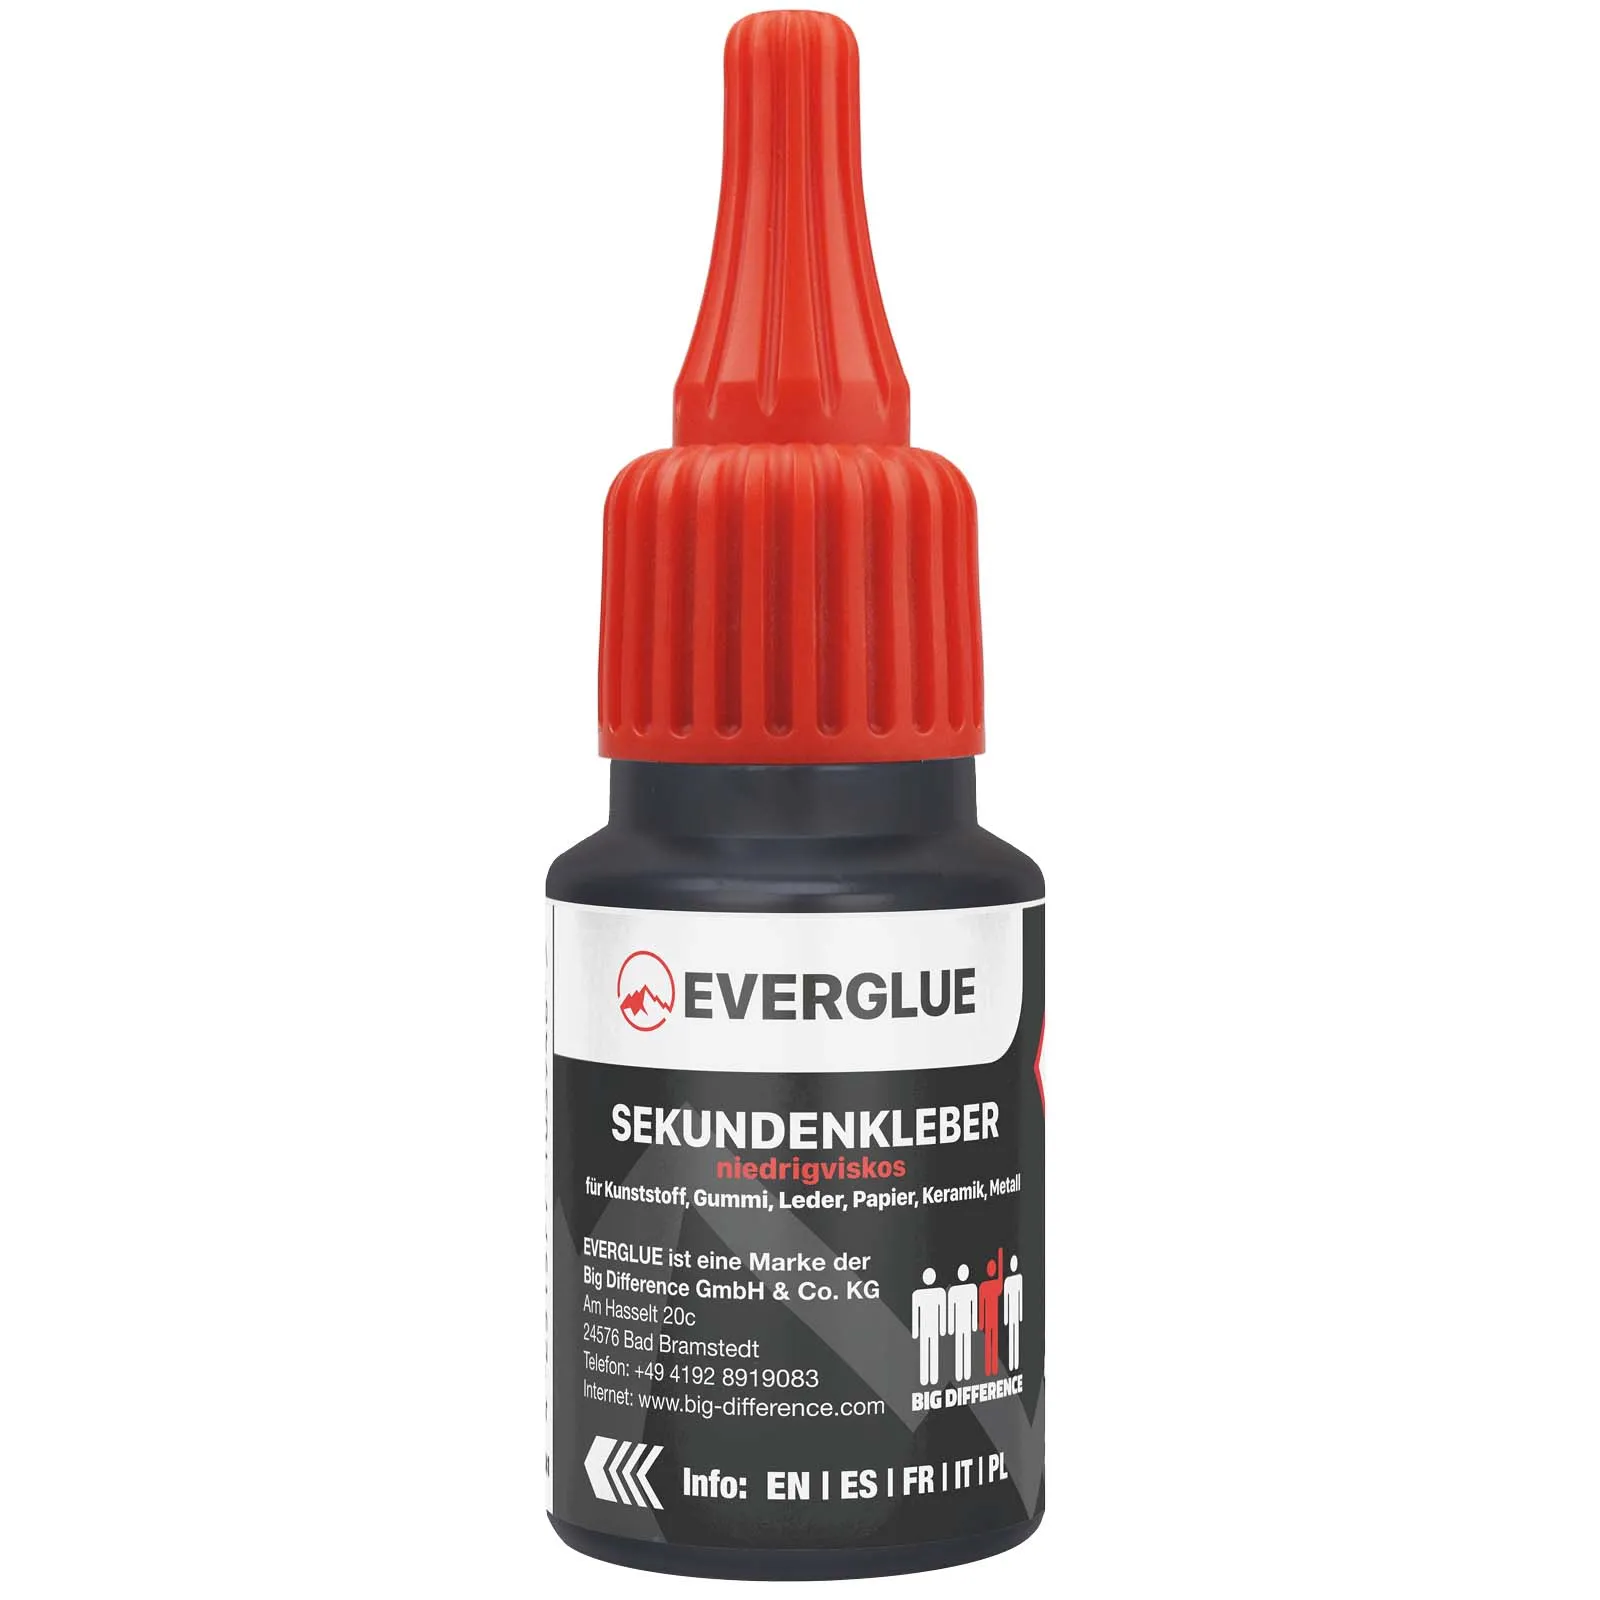 Everglue Sekundenkleber Cyanacrylat niedrigviskos 20g Dosierflasche (dünnflüssig)